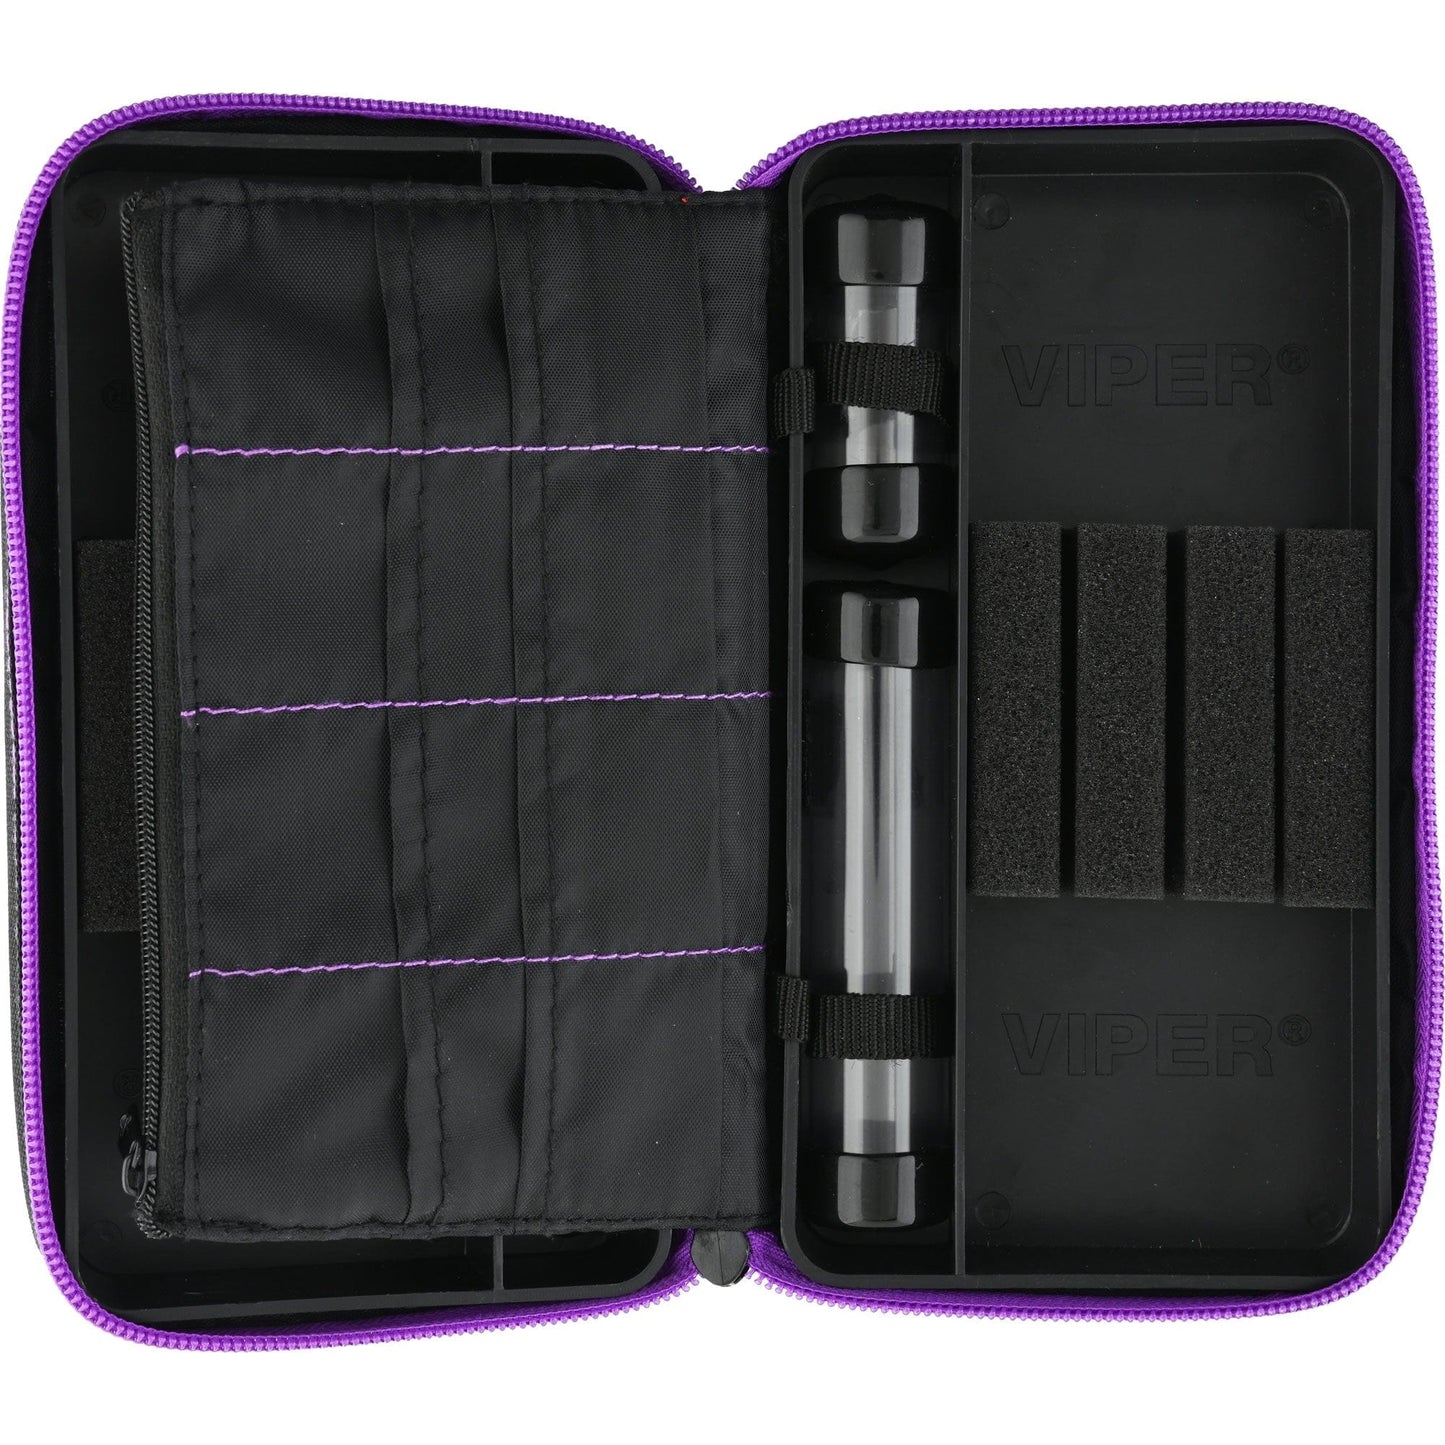 Viper Plazma Pro Dart Case - Extremely Tough & Durable